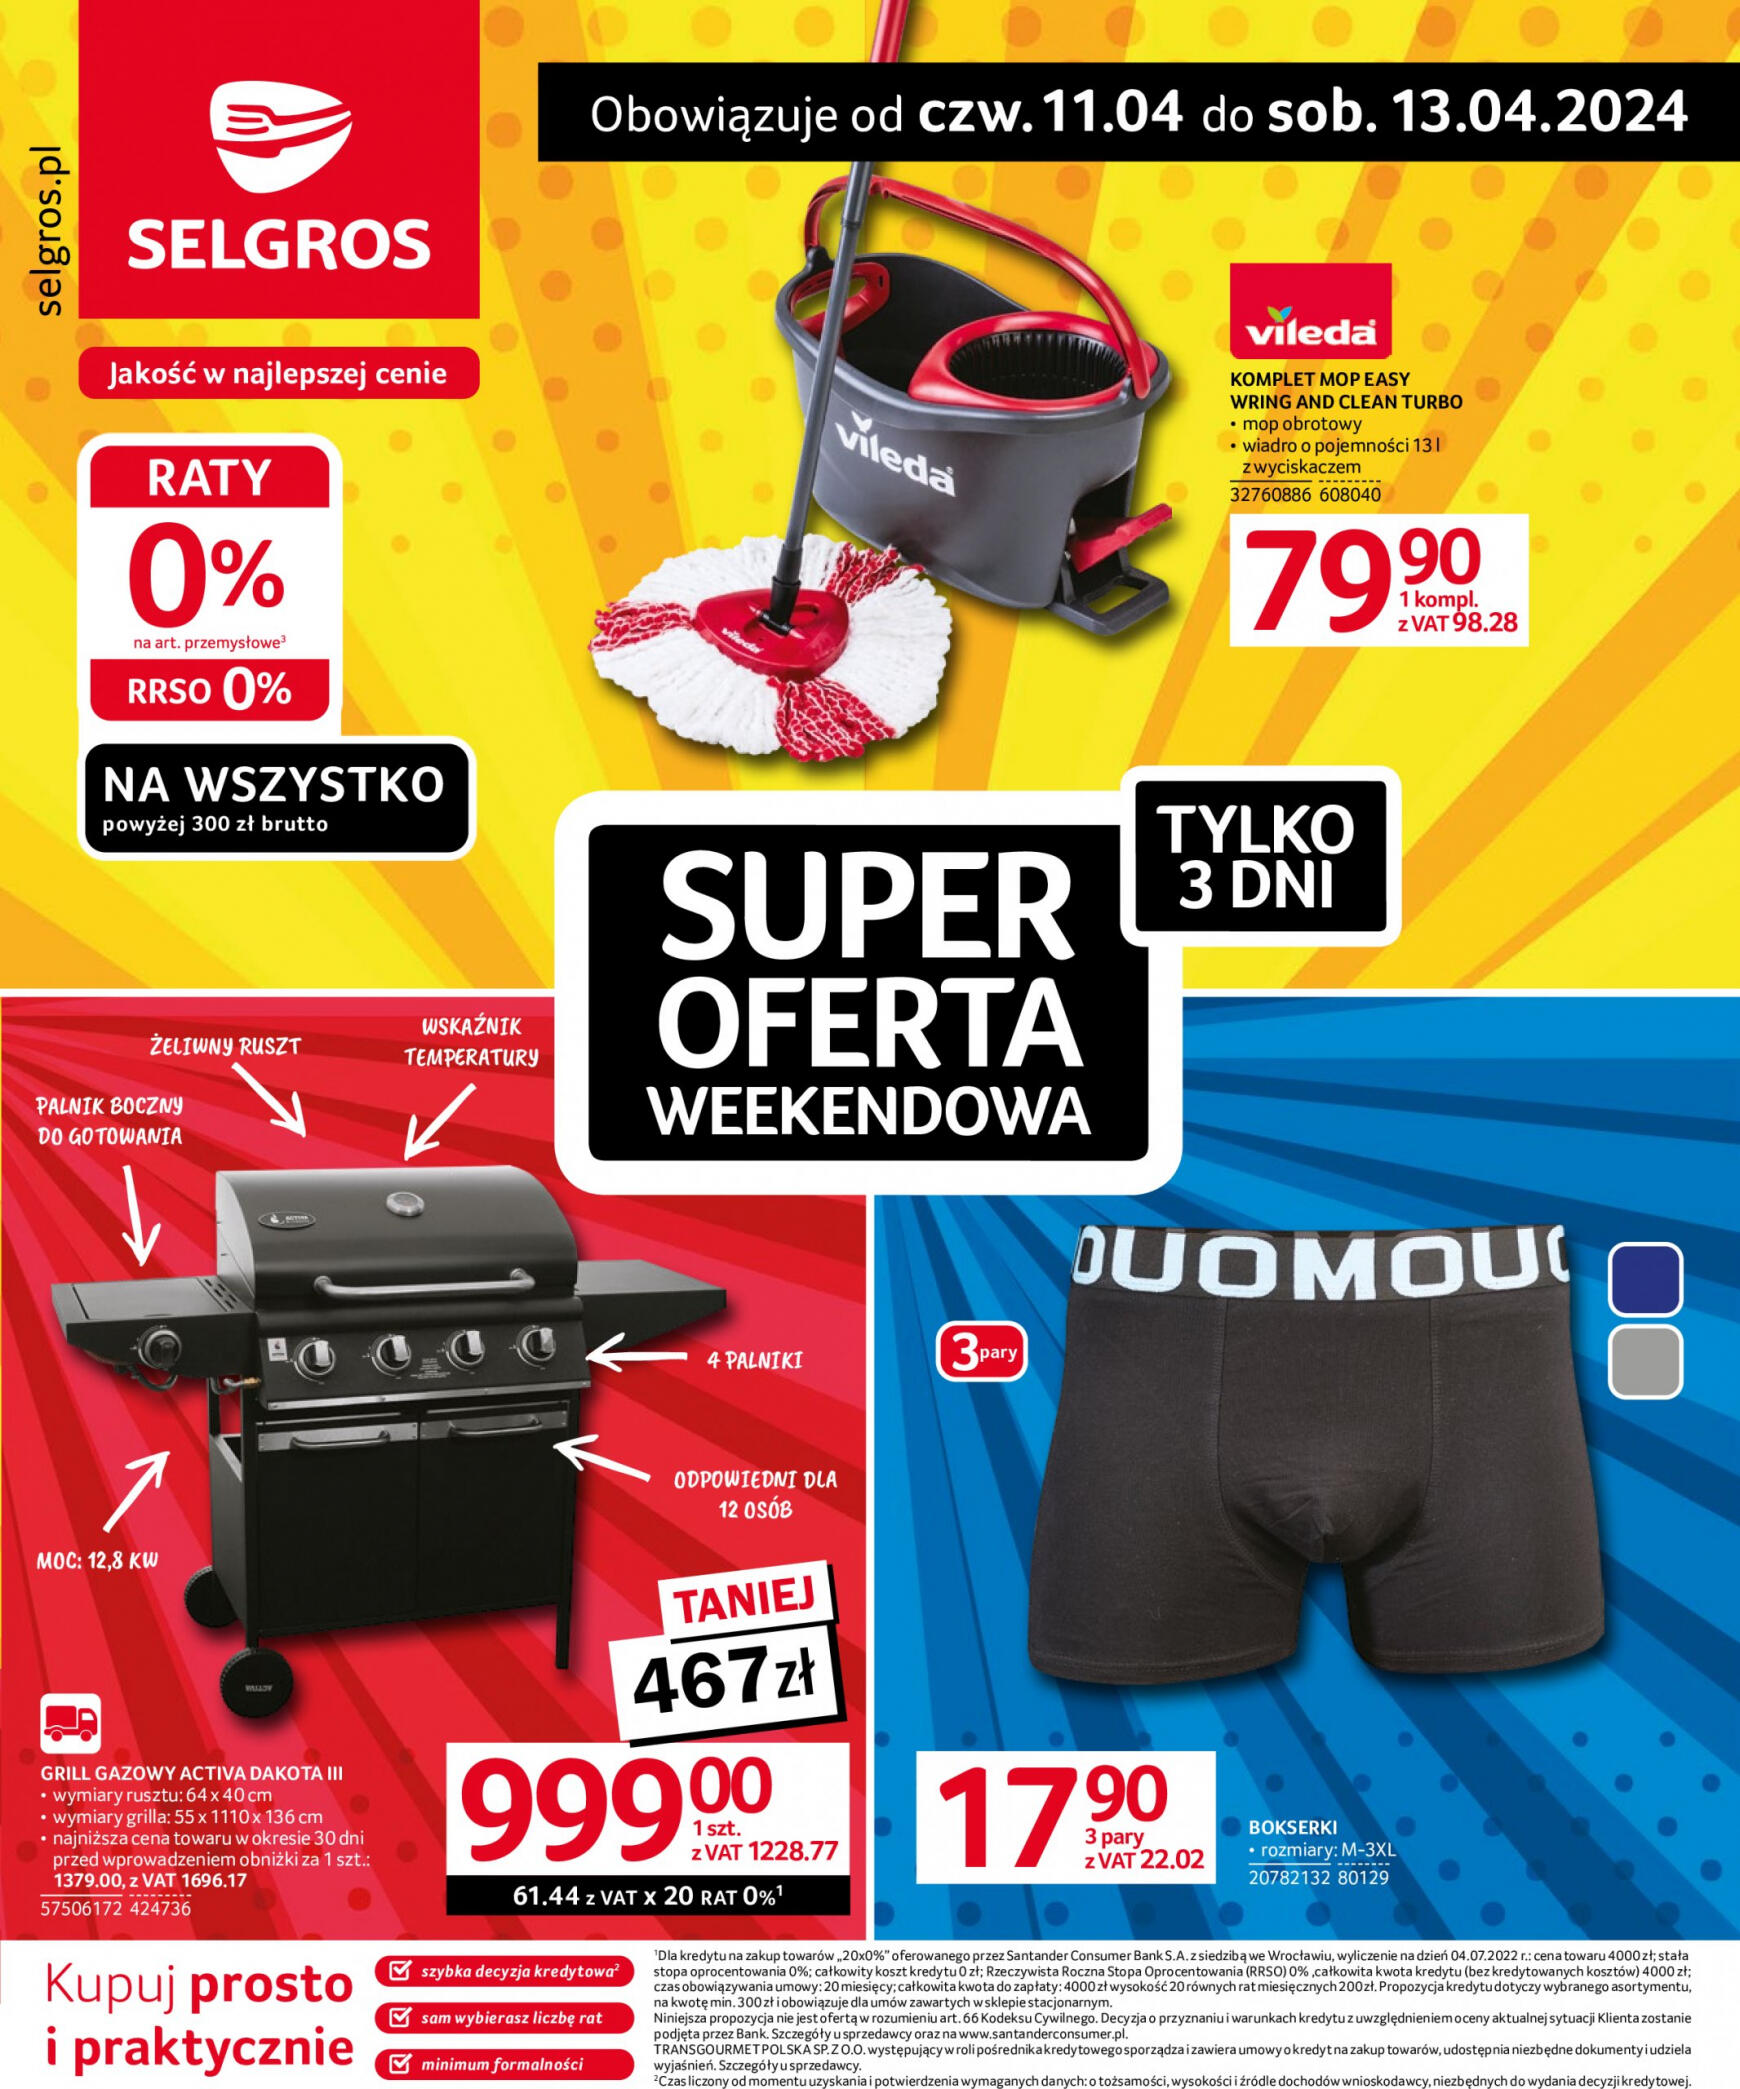 selgros - Selgros cash&carry - Super Oferta Weekendowa gazetka aktualna ważna od 11.04. - 13.04.